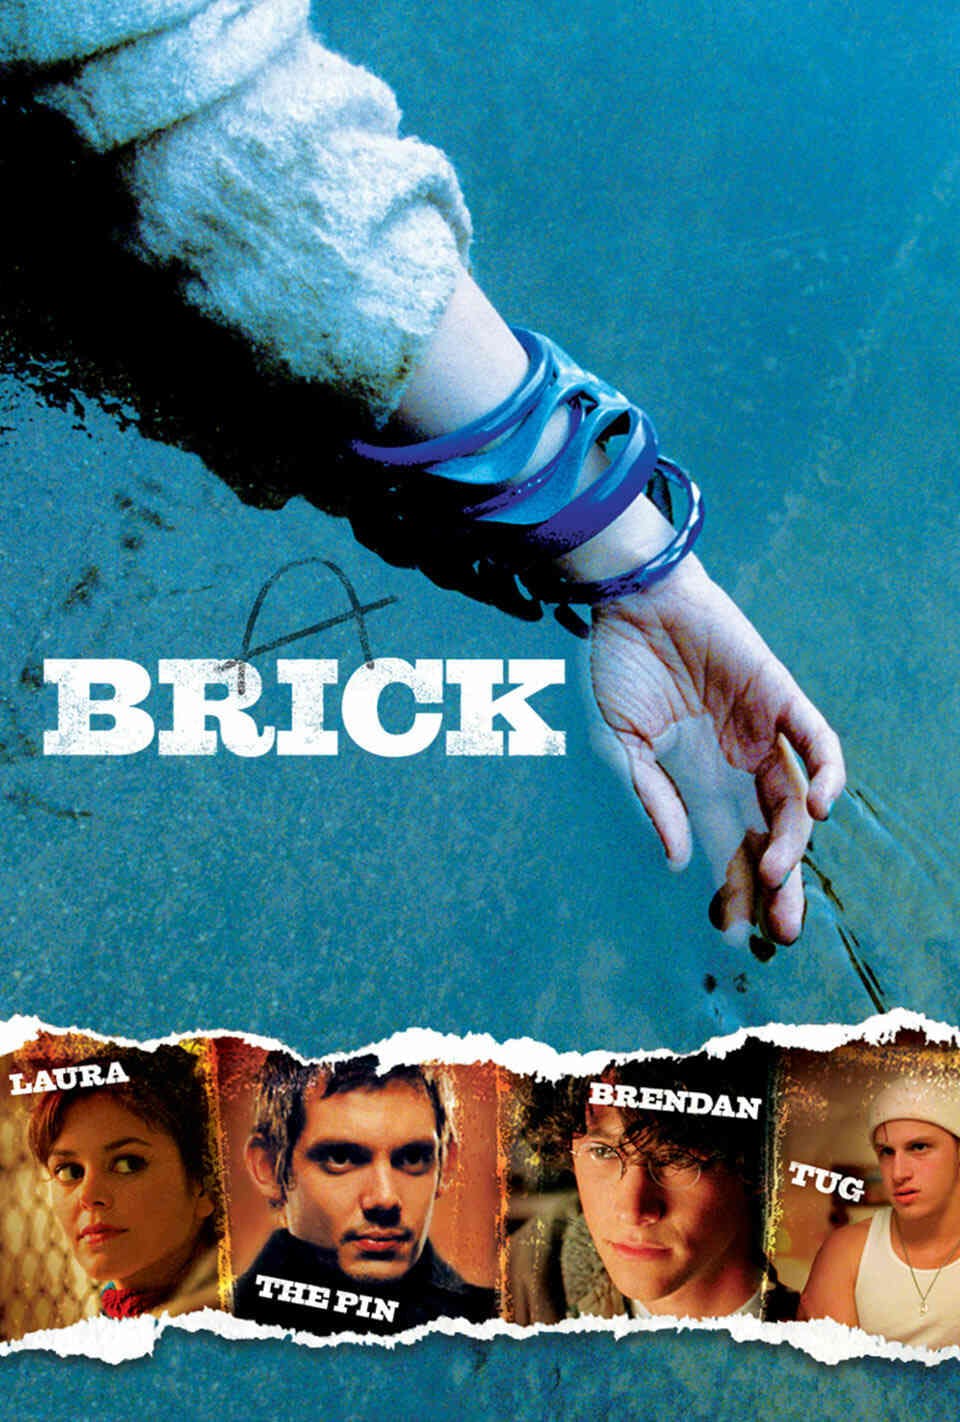 Read Brick screenplay (poster)